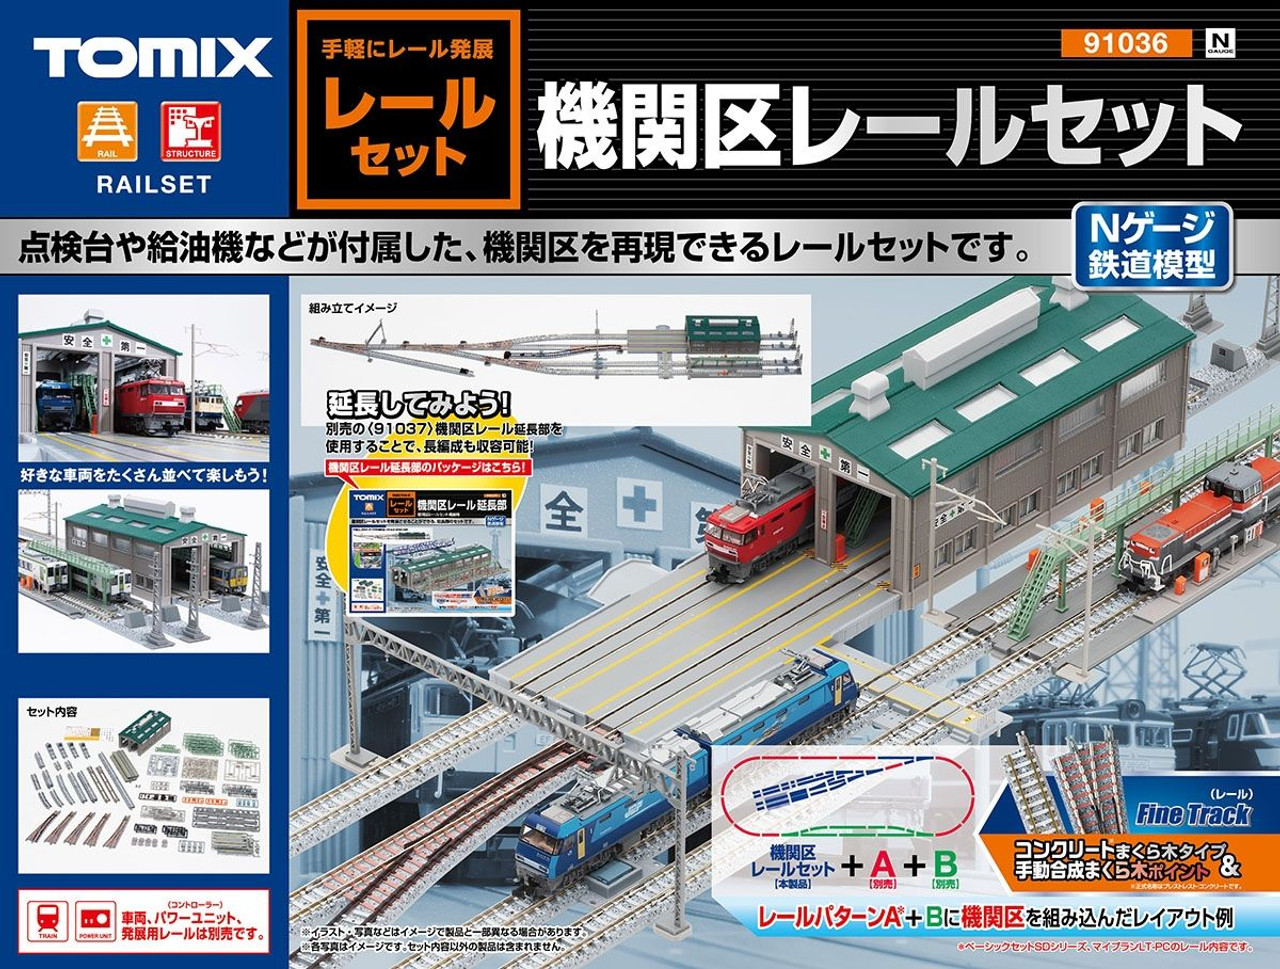 Tomix 91036 Fine Track Engine Depot Rail Set (N scale)